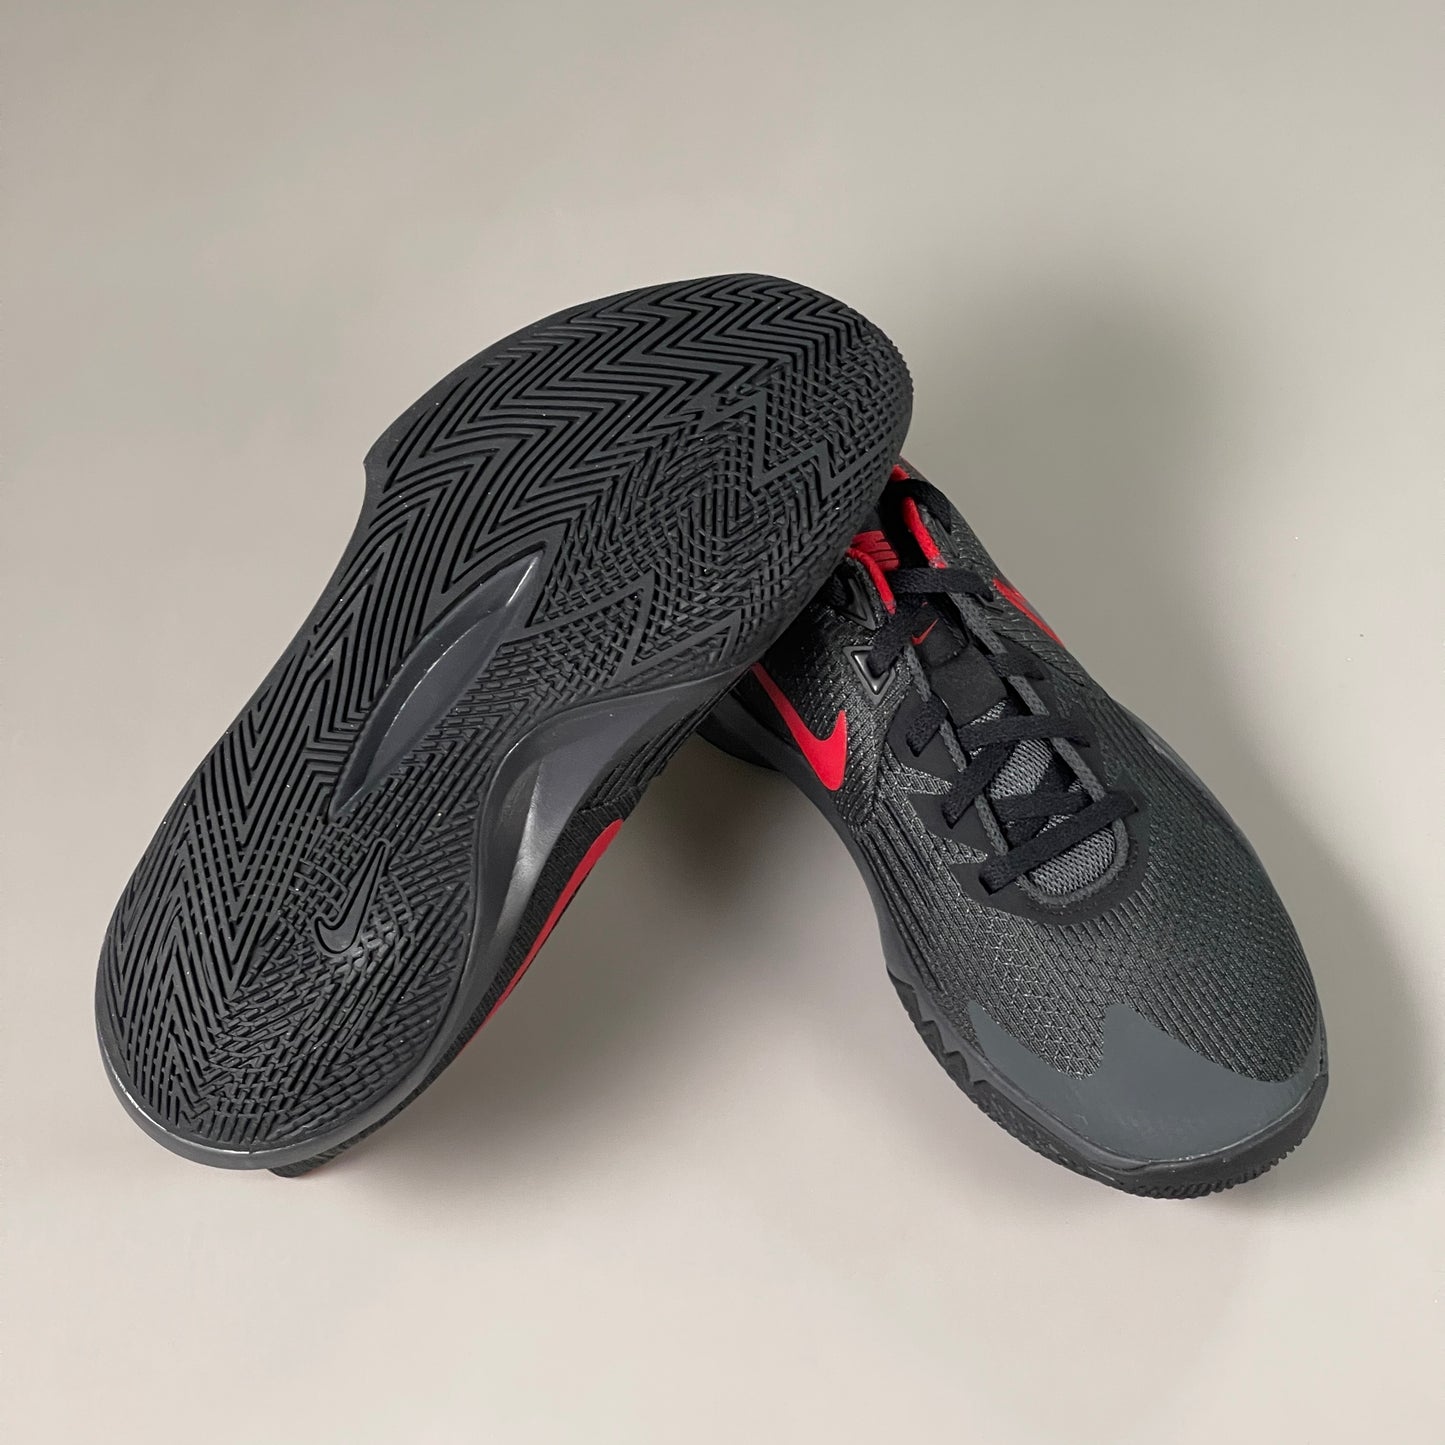 NIKE Precision 5 Basketball Shoes Men's Sz 11 Anthracite/Grey CW3403 007 (New)